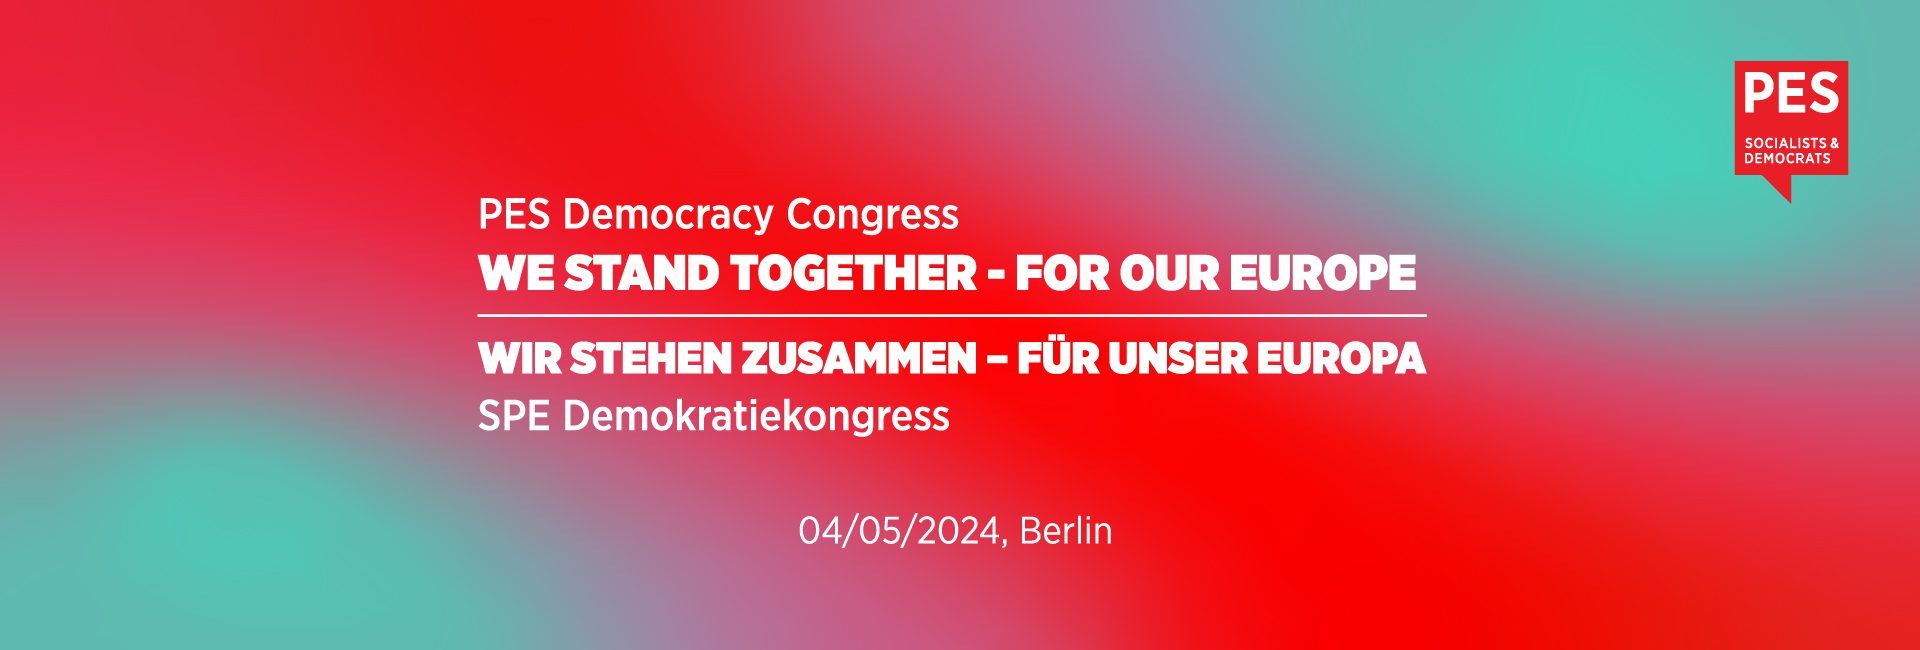 Berlin event banner